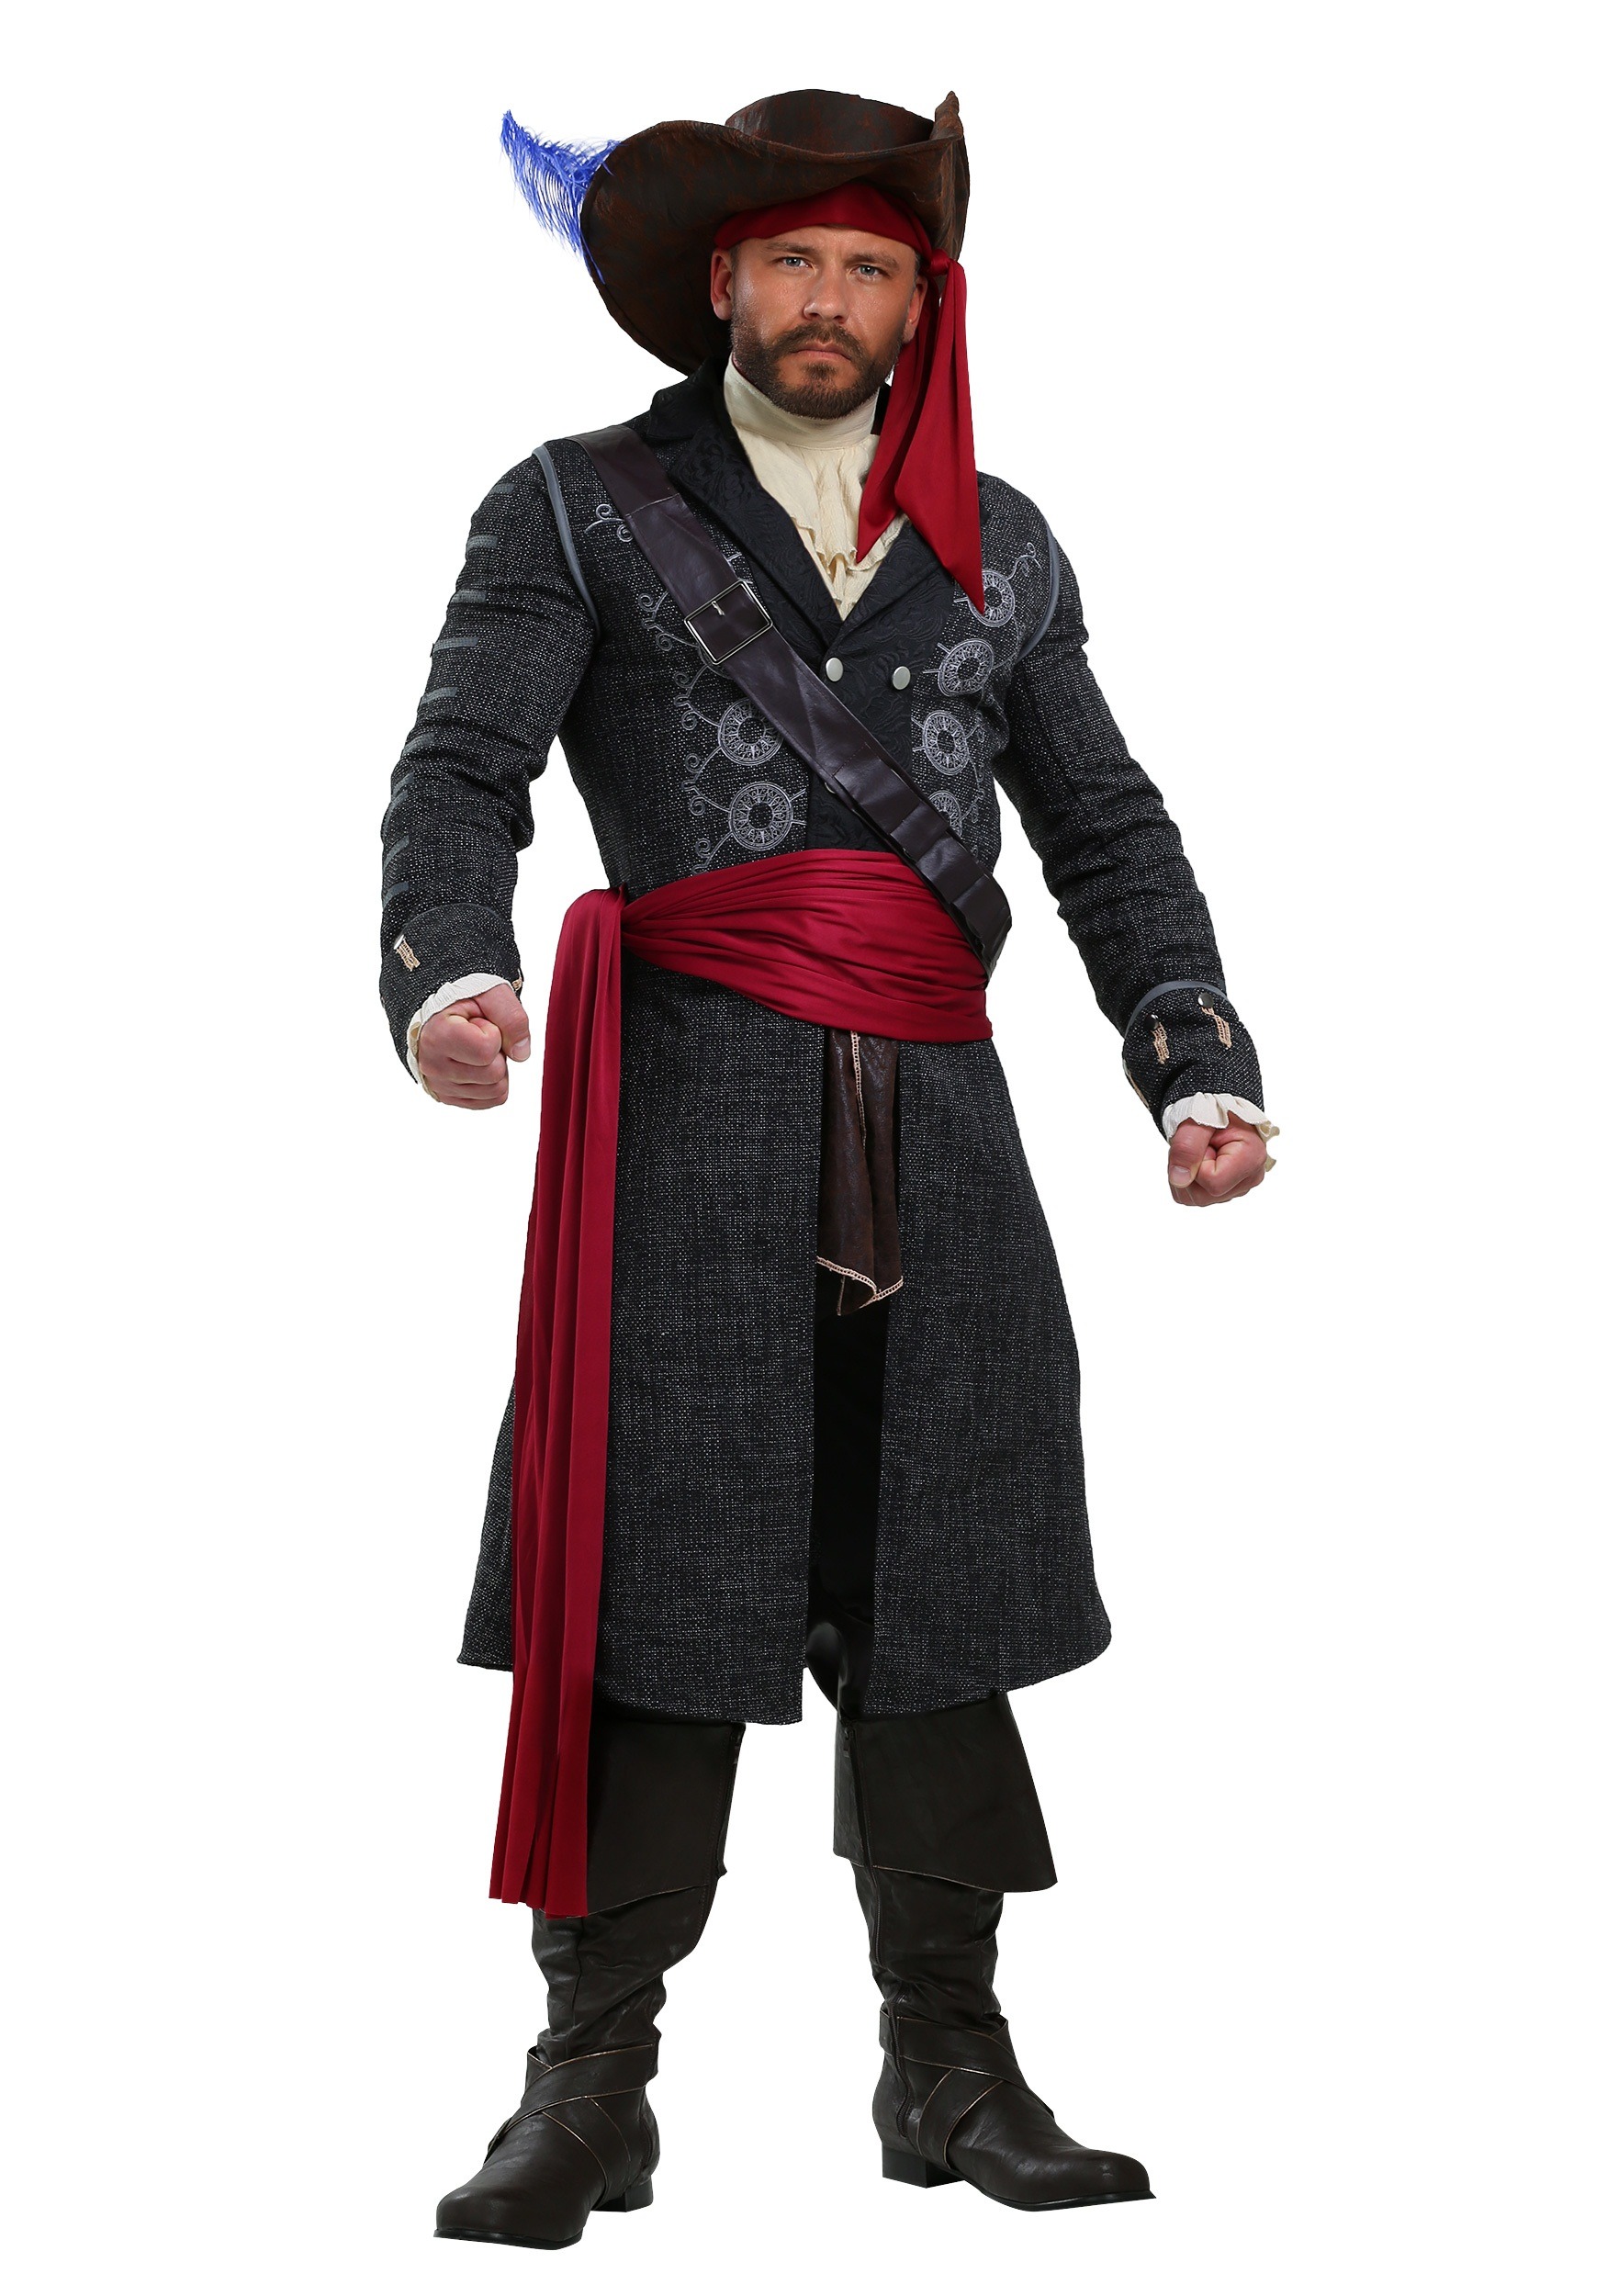 Image of FUN Costumes Blackbeard Plus Size Costume for Men | Men's Pirate Costume